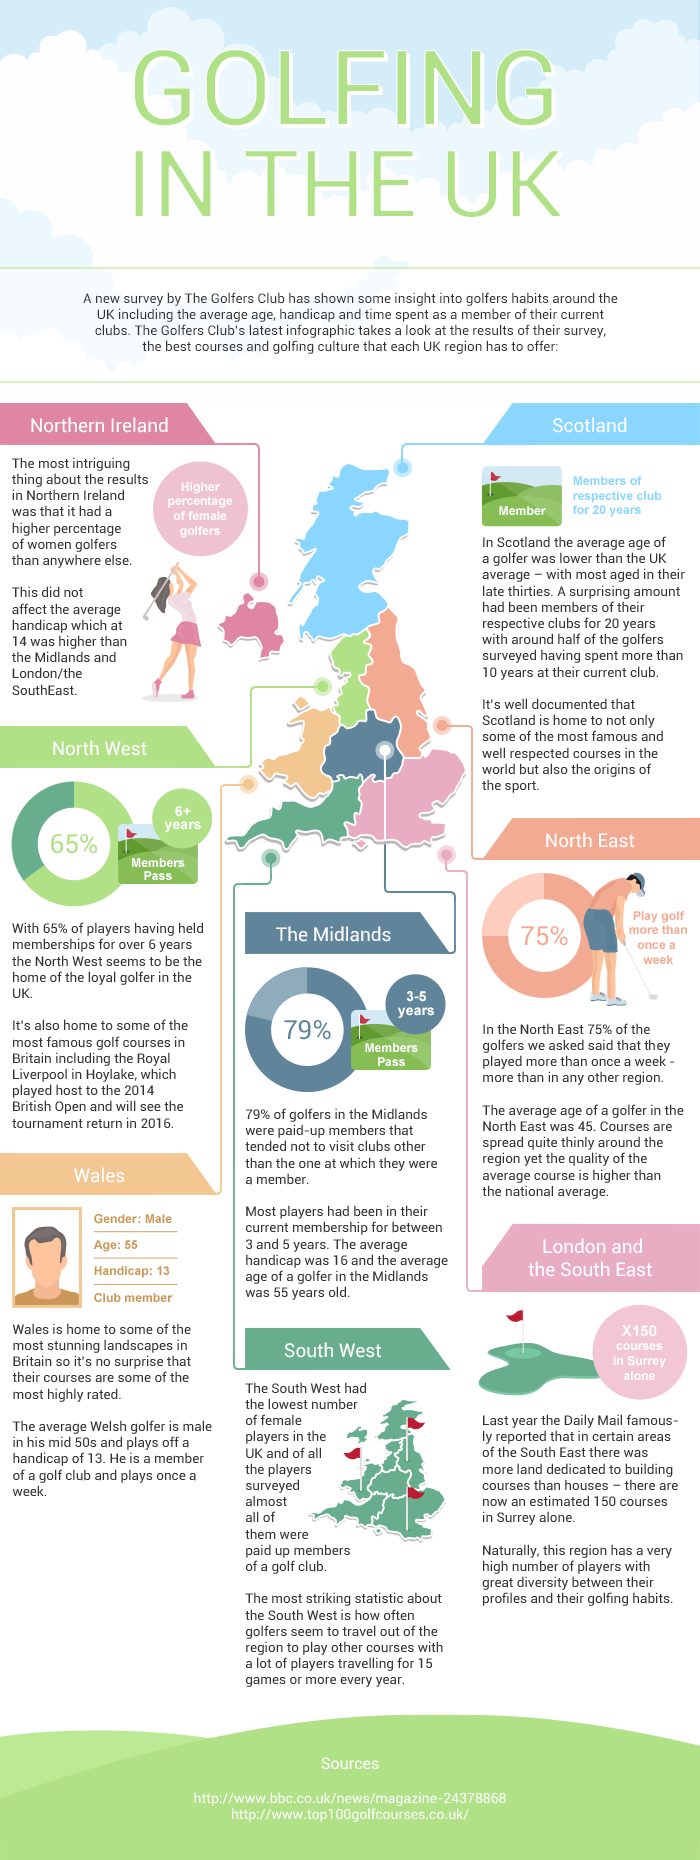 golfing-in-the-uk-infographic lee edit v2